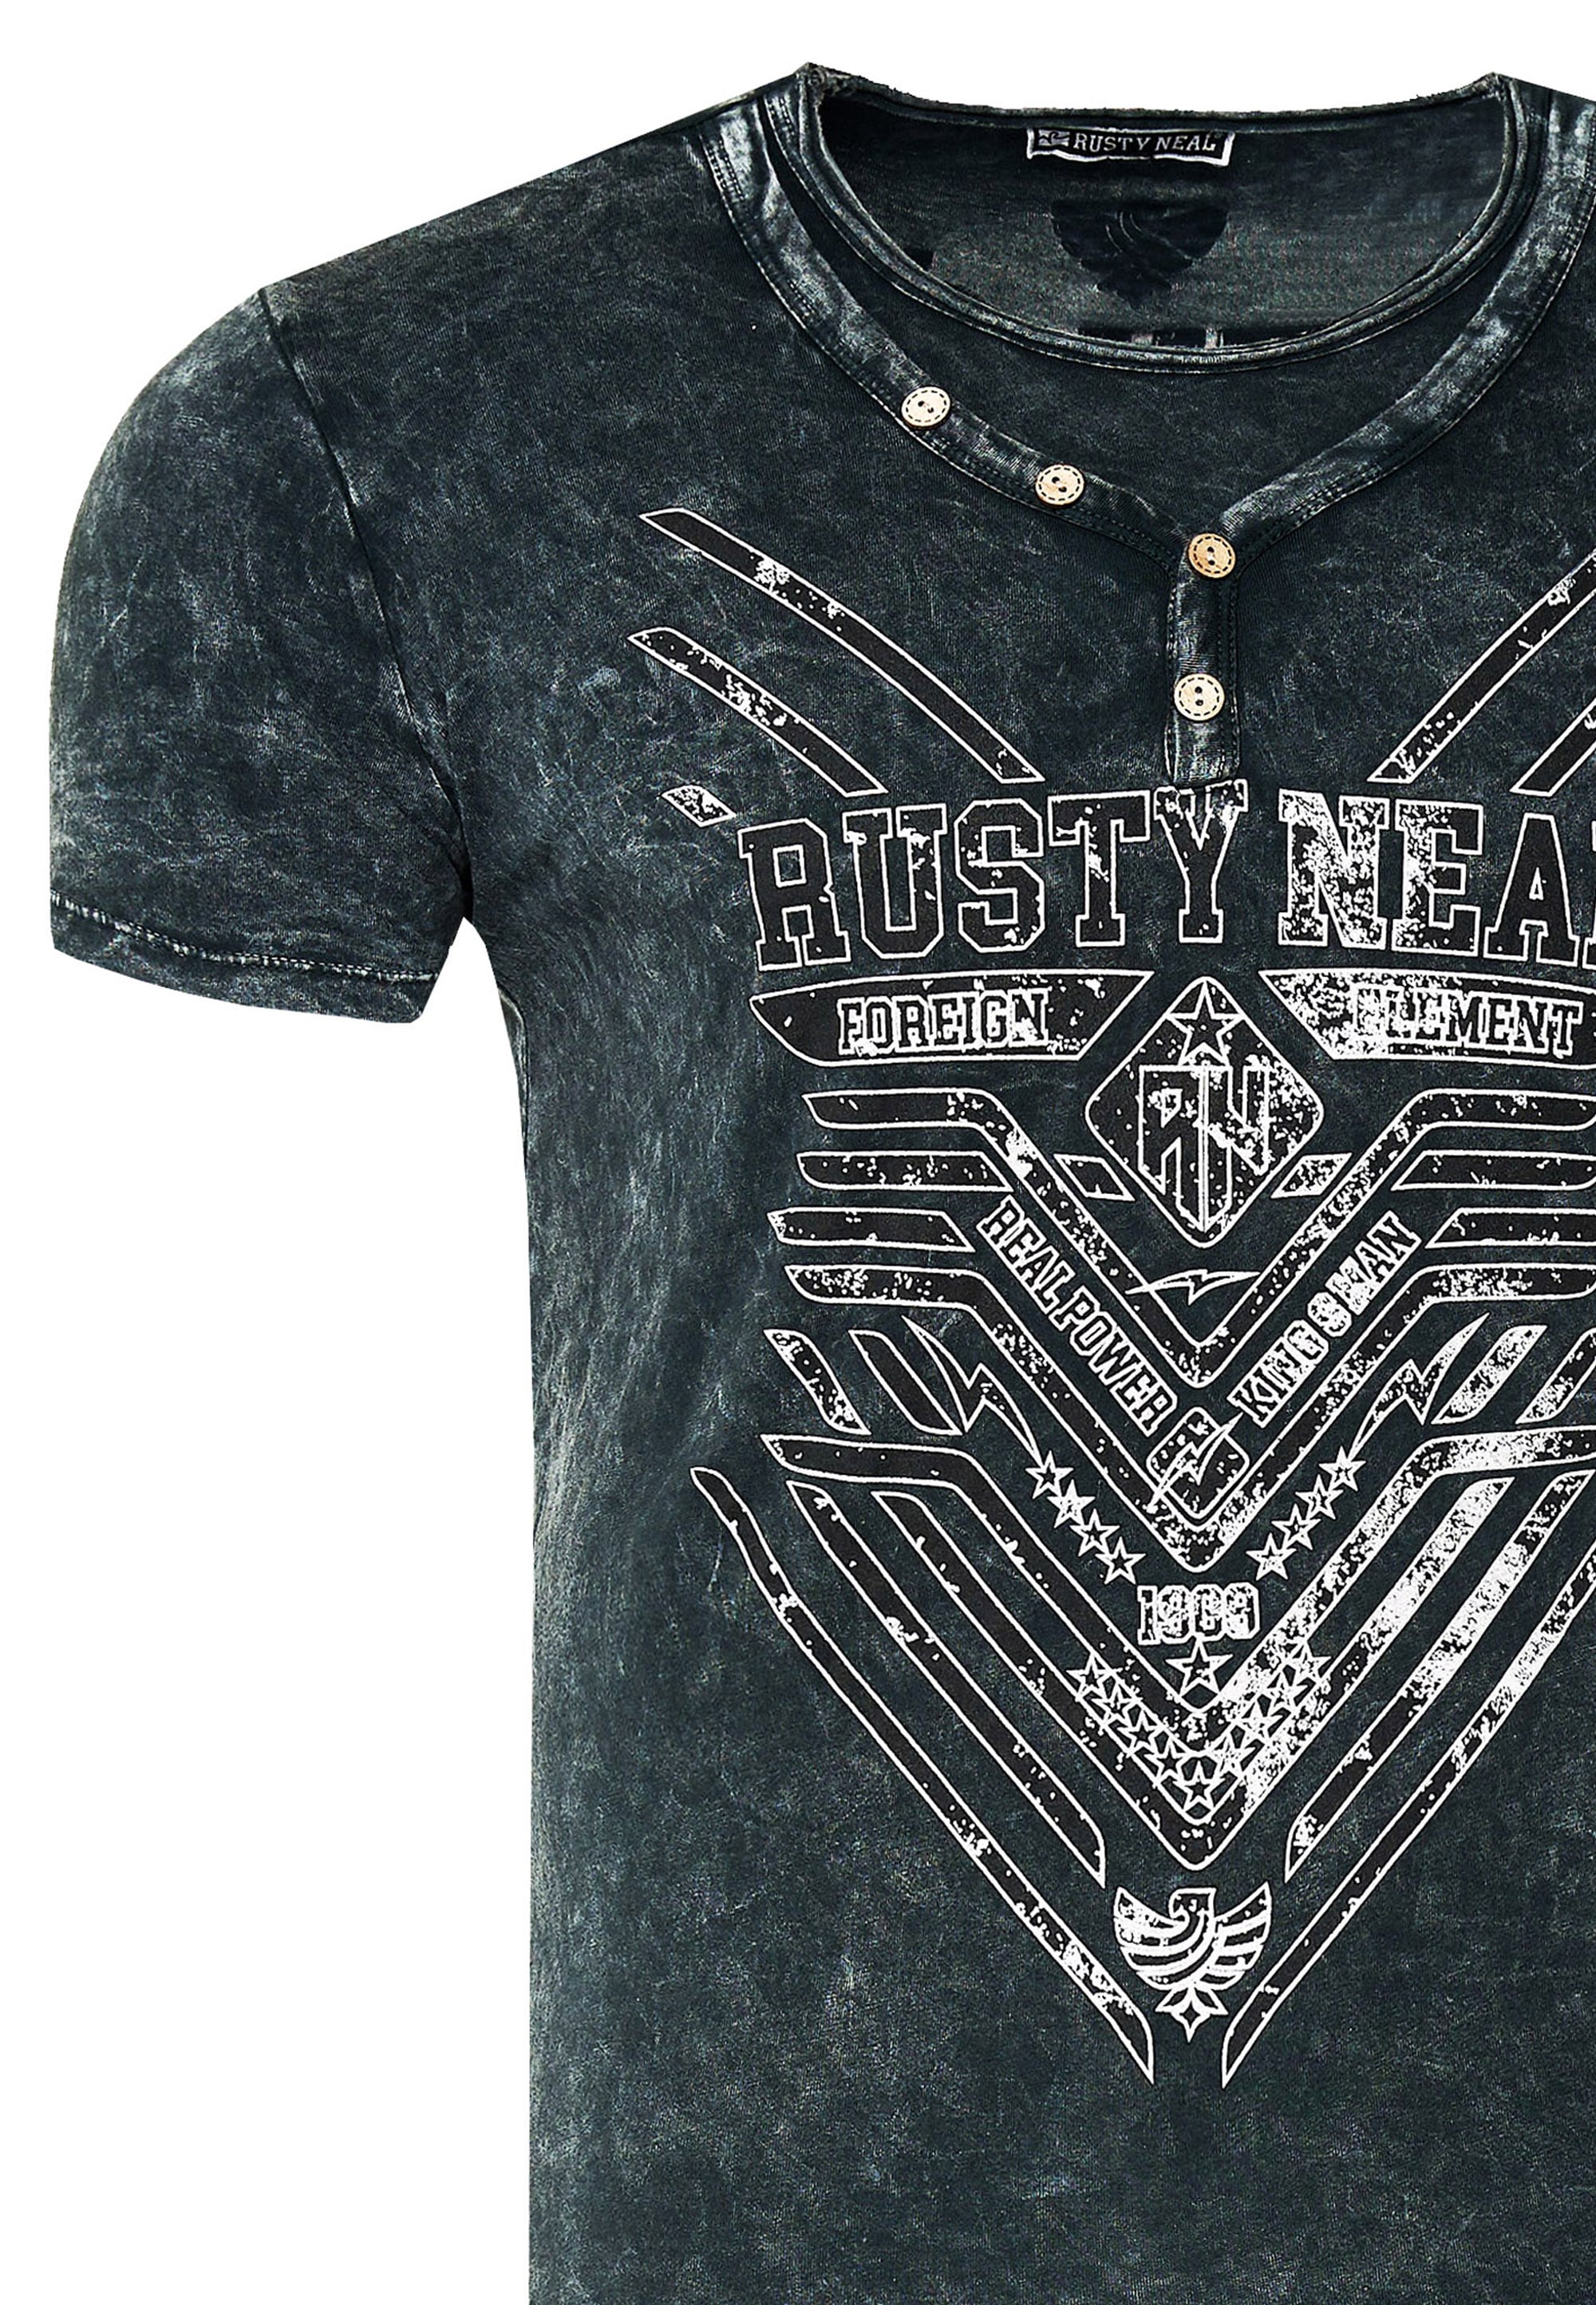 Neal | stylischem mit Rusty BAUR Black Print Friday T-Shirt,